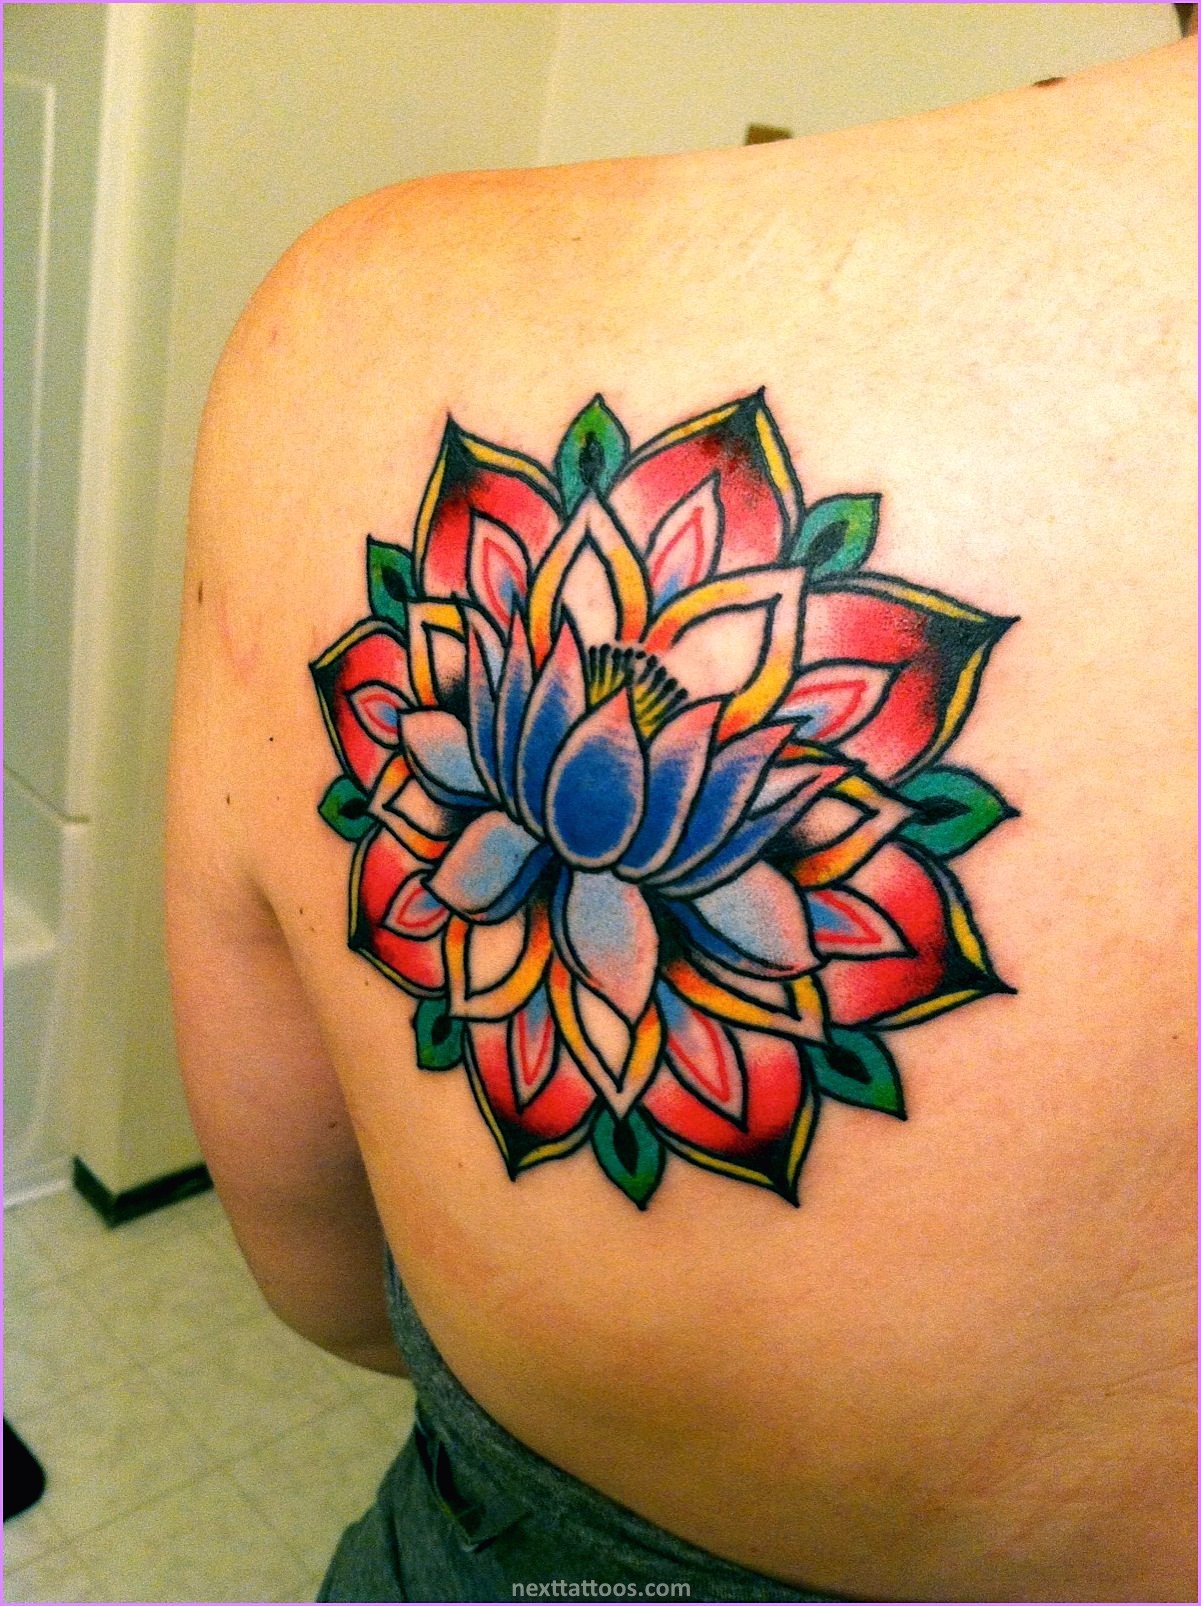 Lotus Flower Tattoos - Spiritual Awakening, Knowledge and Beauty